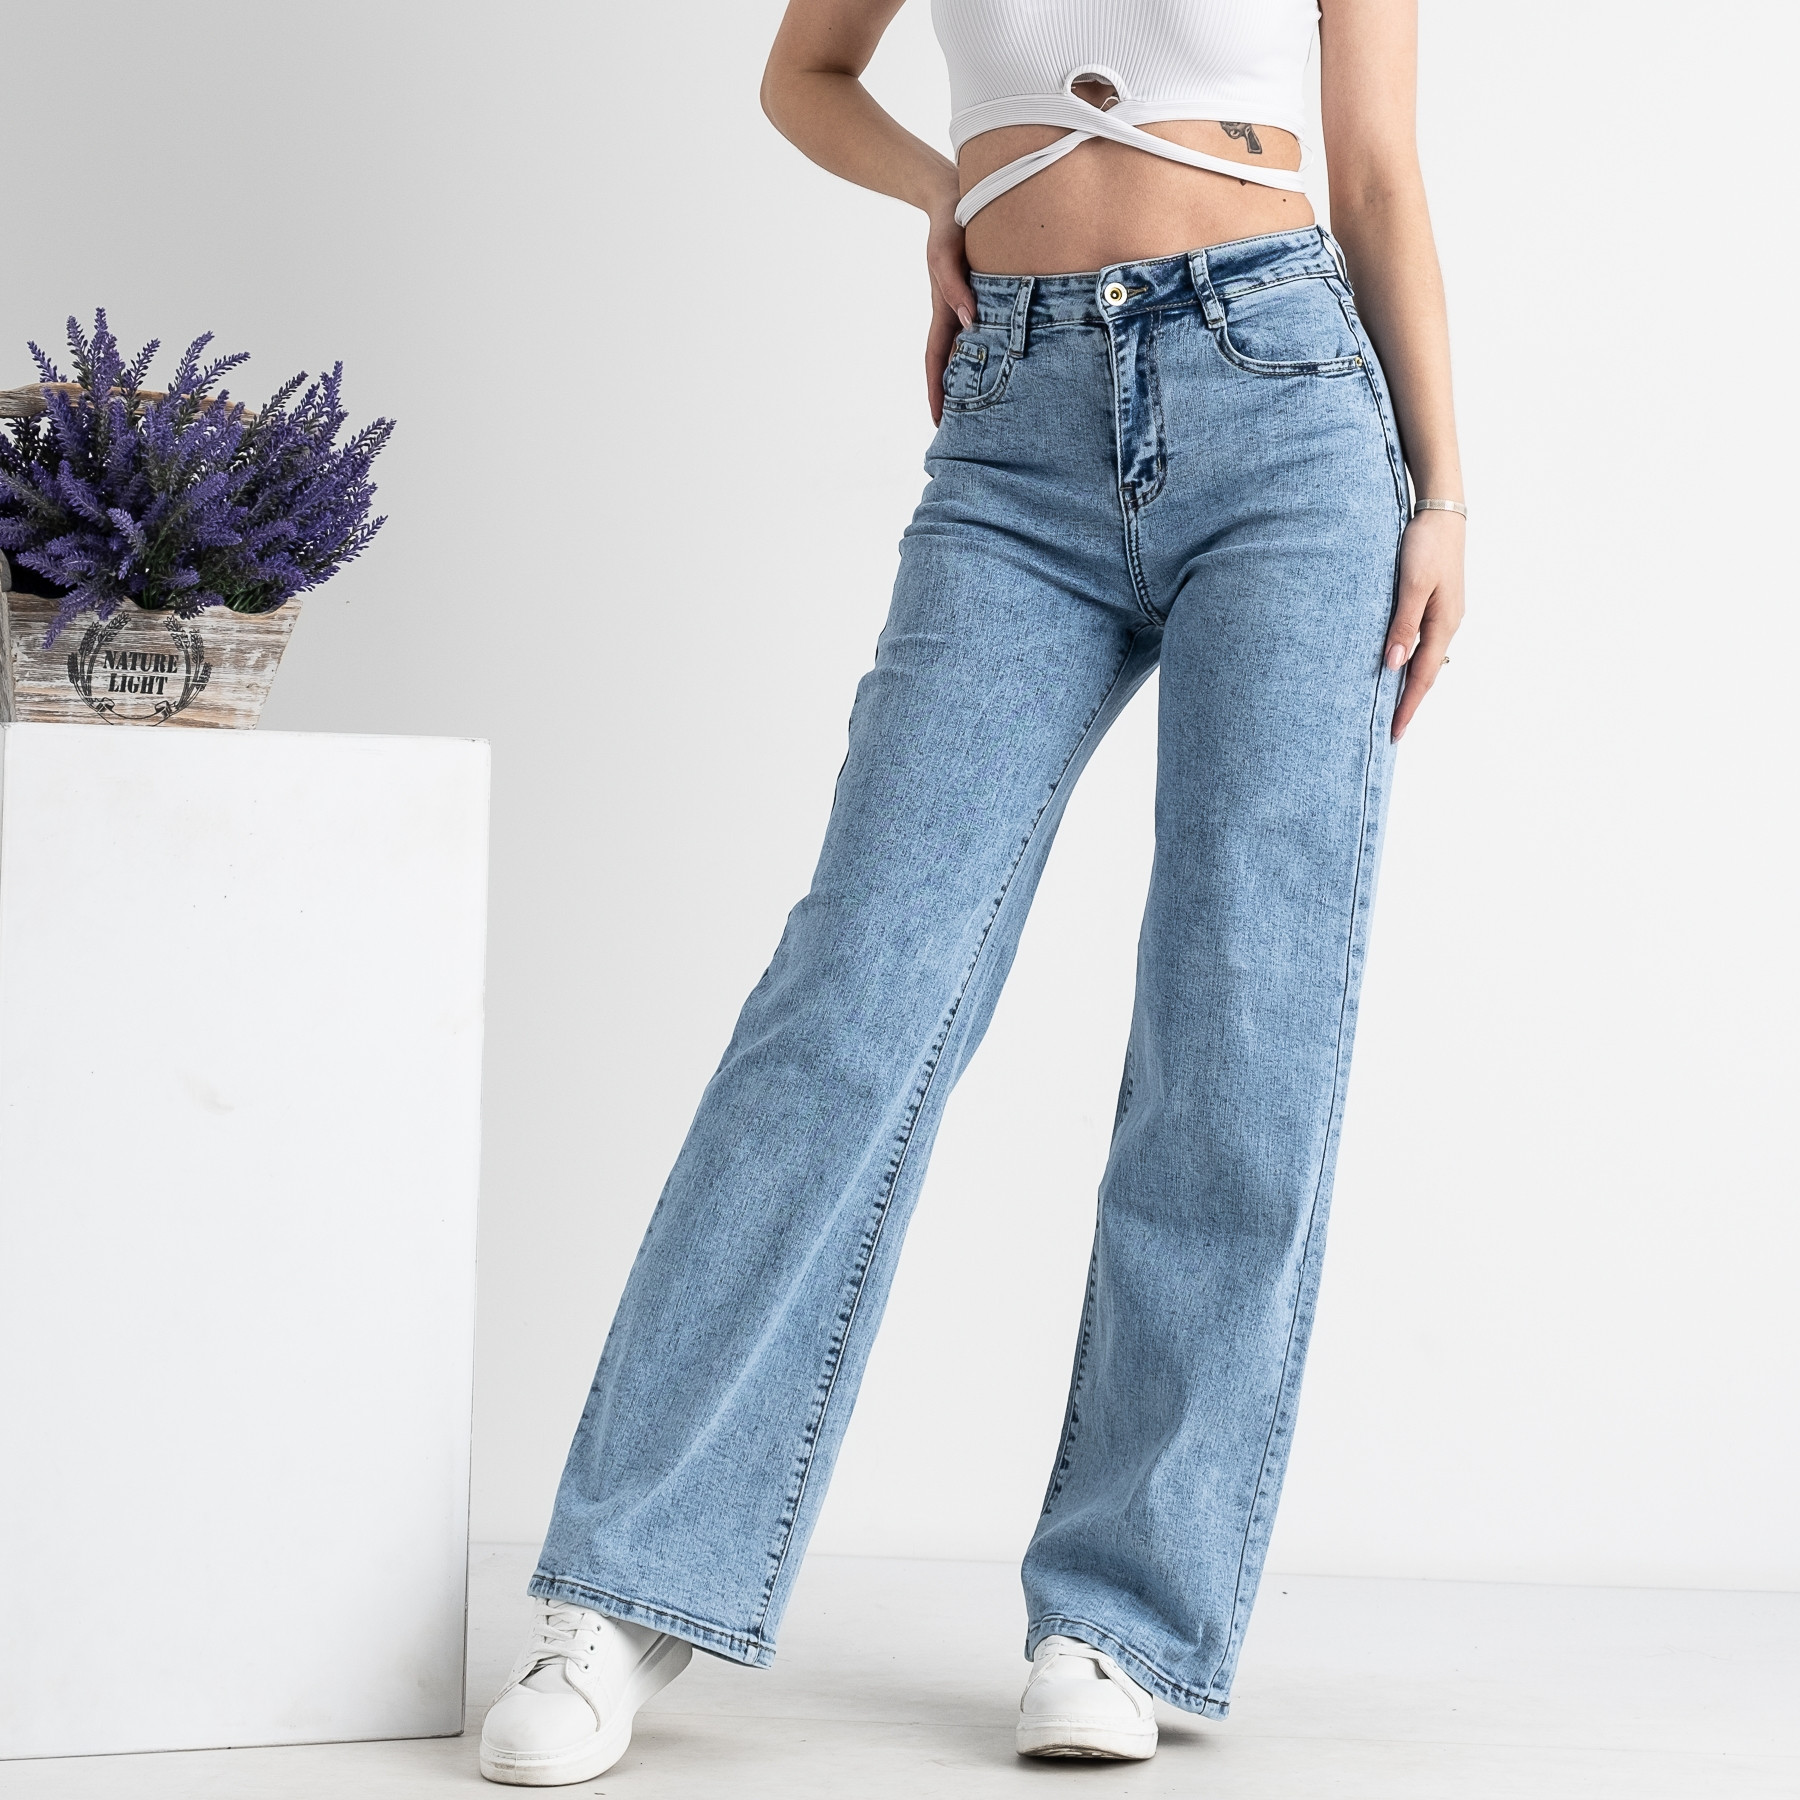 9008 KT.Moss джинсы-палаццо женские голубые стрейчевые ( 6 ед. размеры: 25.26.27.28.29.30 )